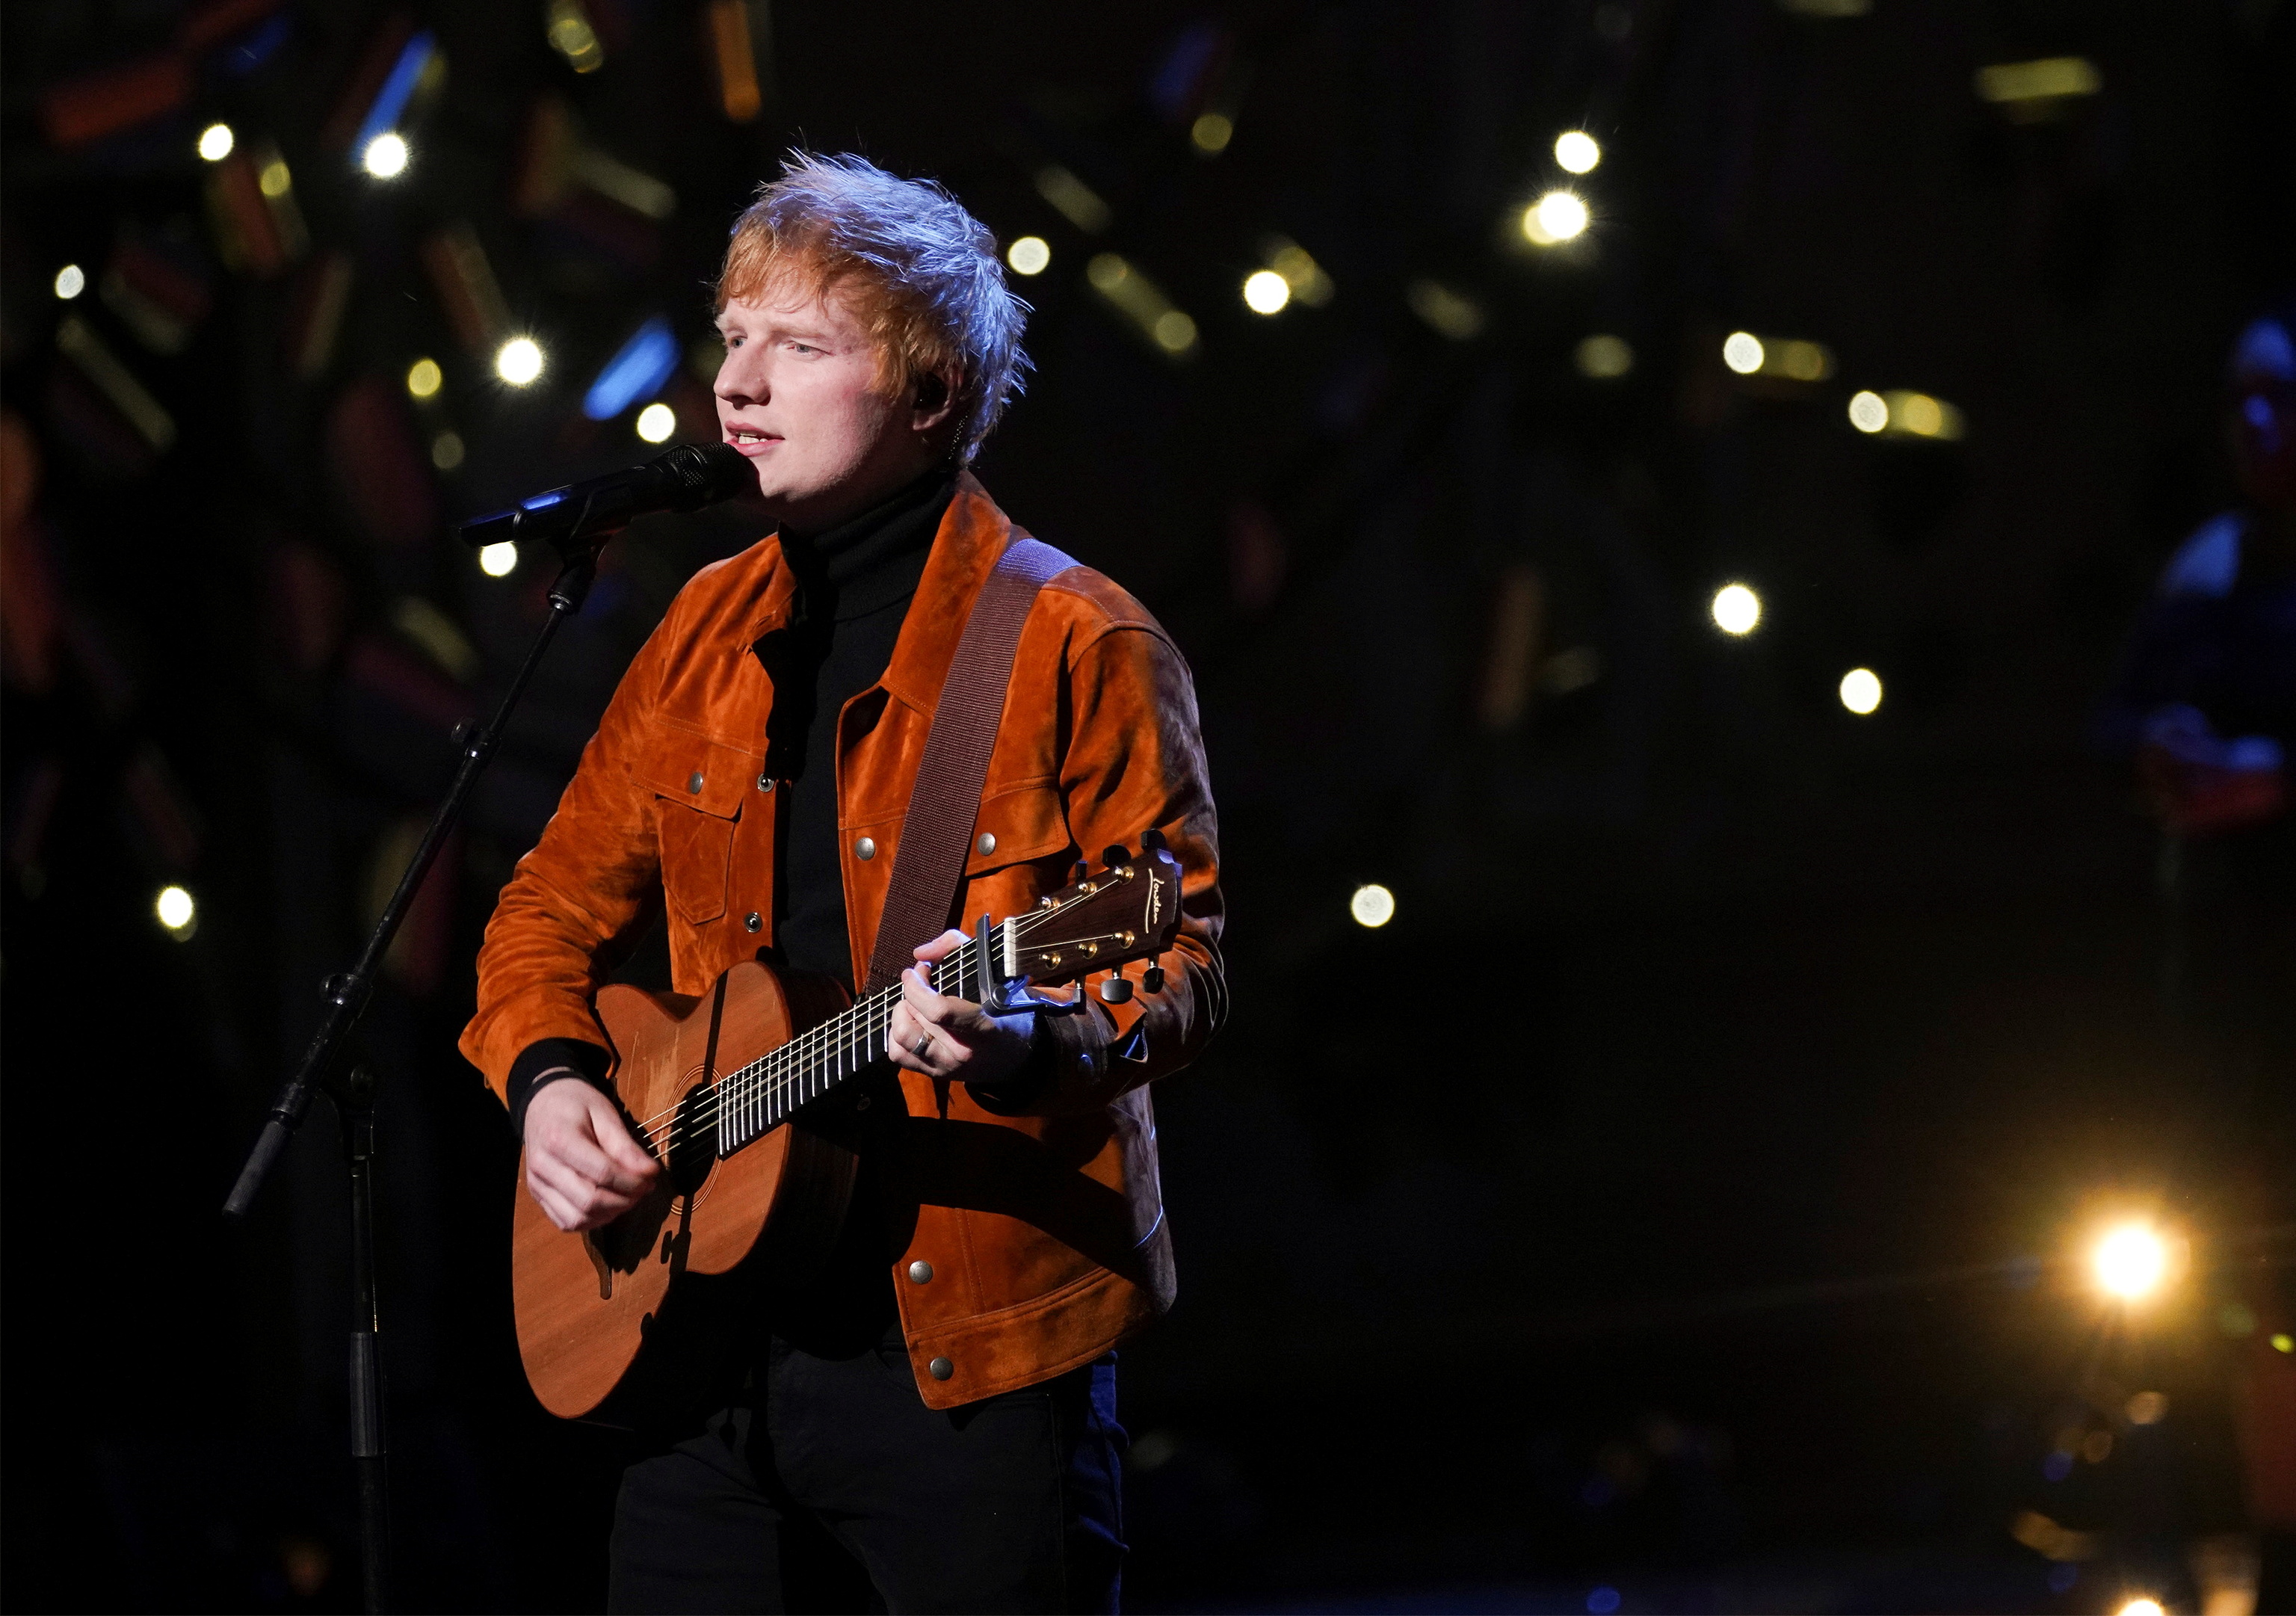 Ed Sheeran da positivo por Covid-19 antes de salida de nuevo disco | Música